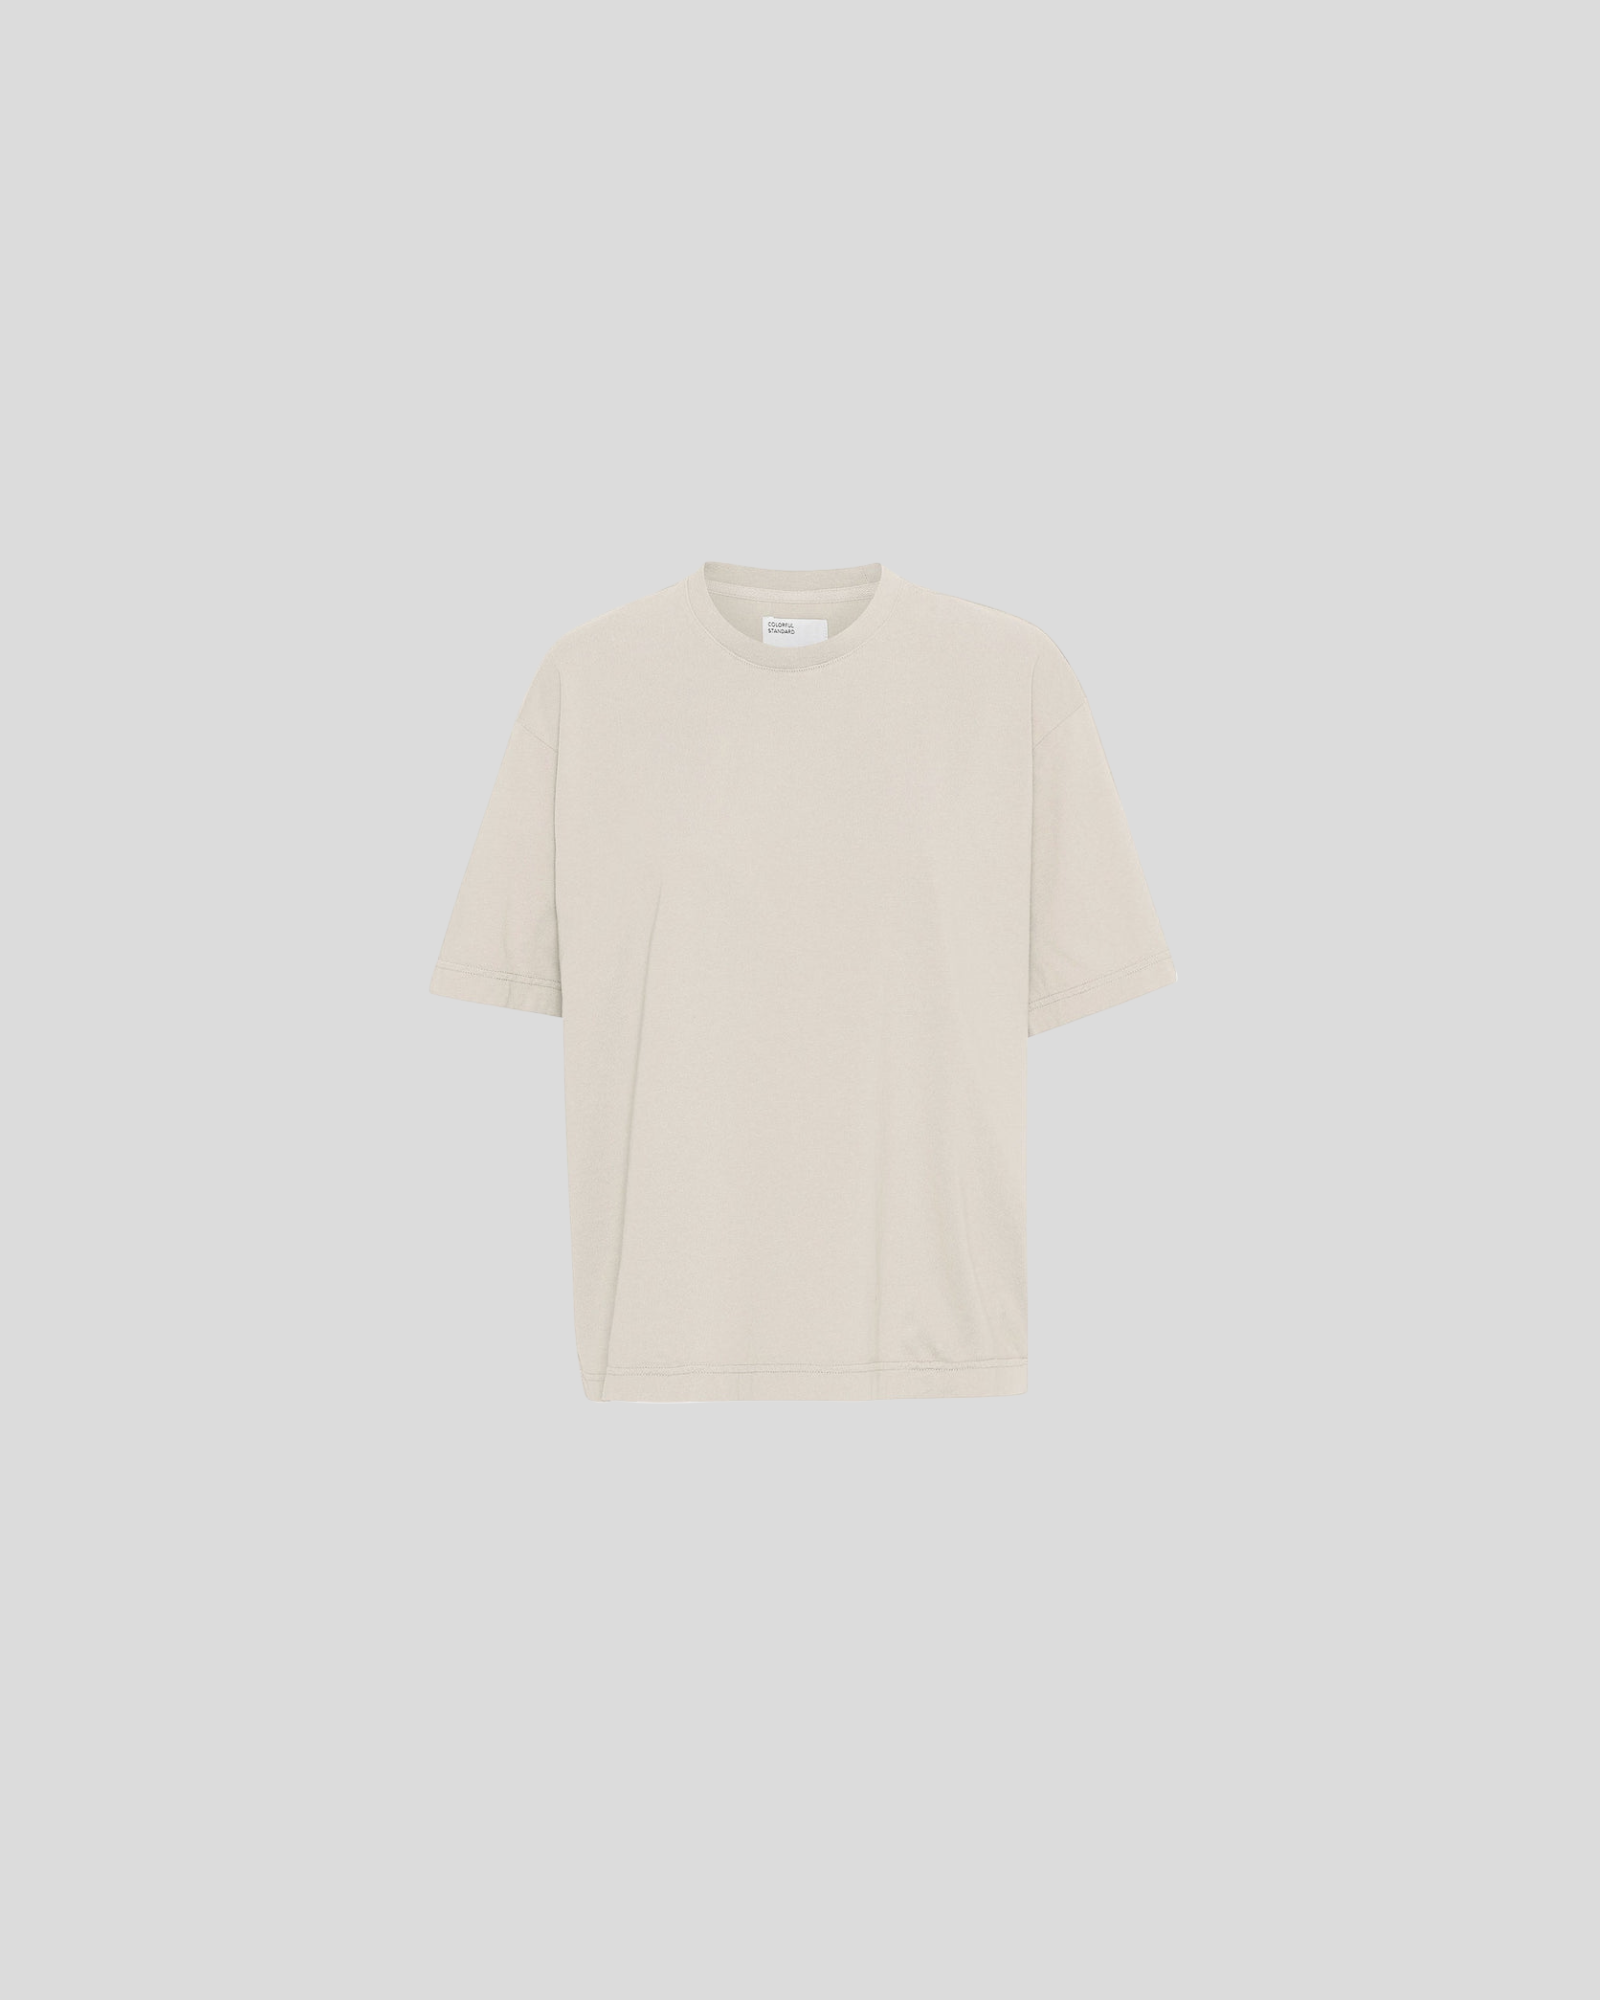 Colorful Standard || Oversized Organic T-Shirt - Ivory White